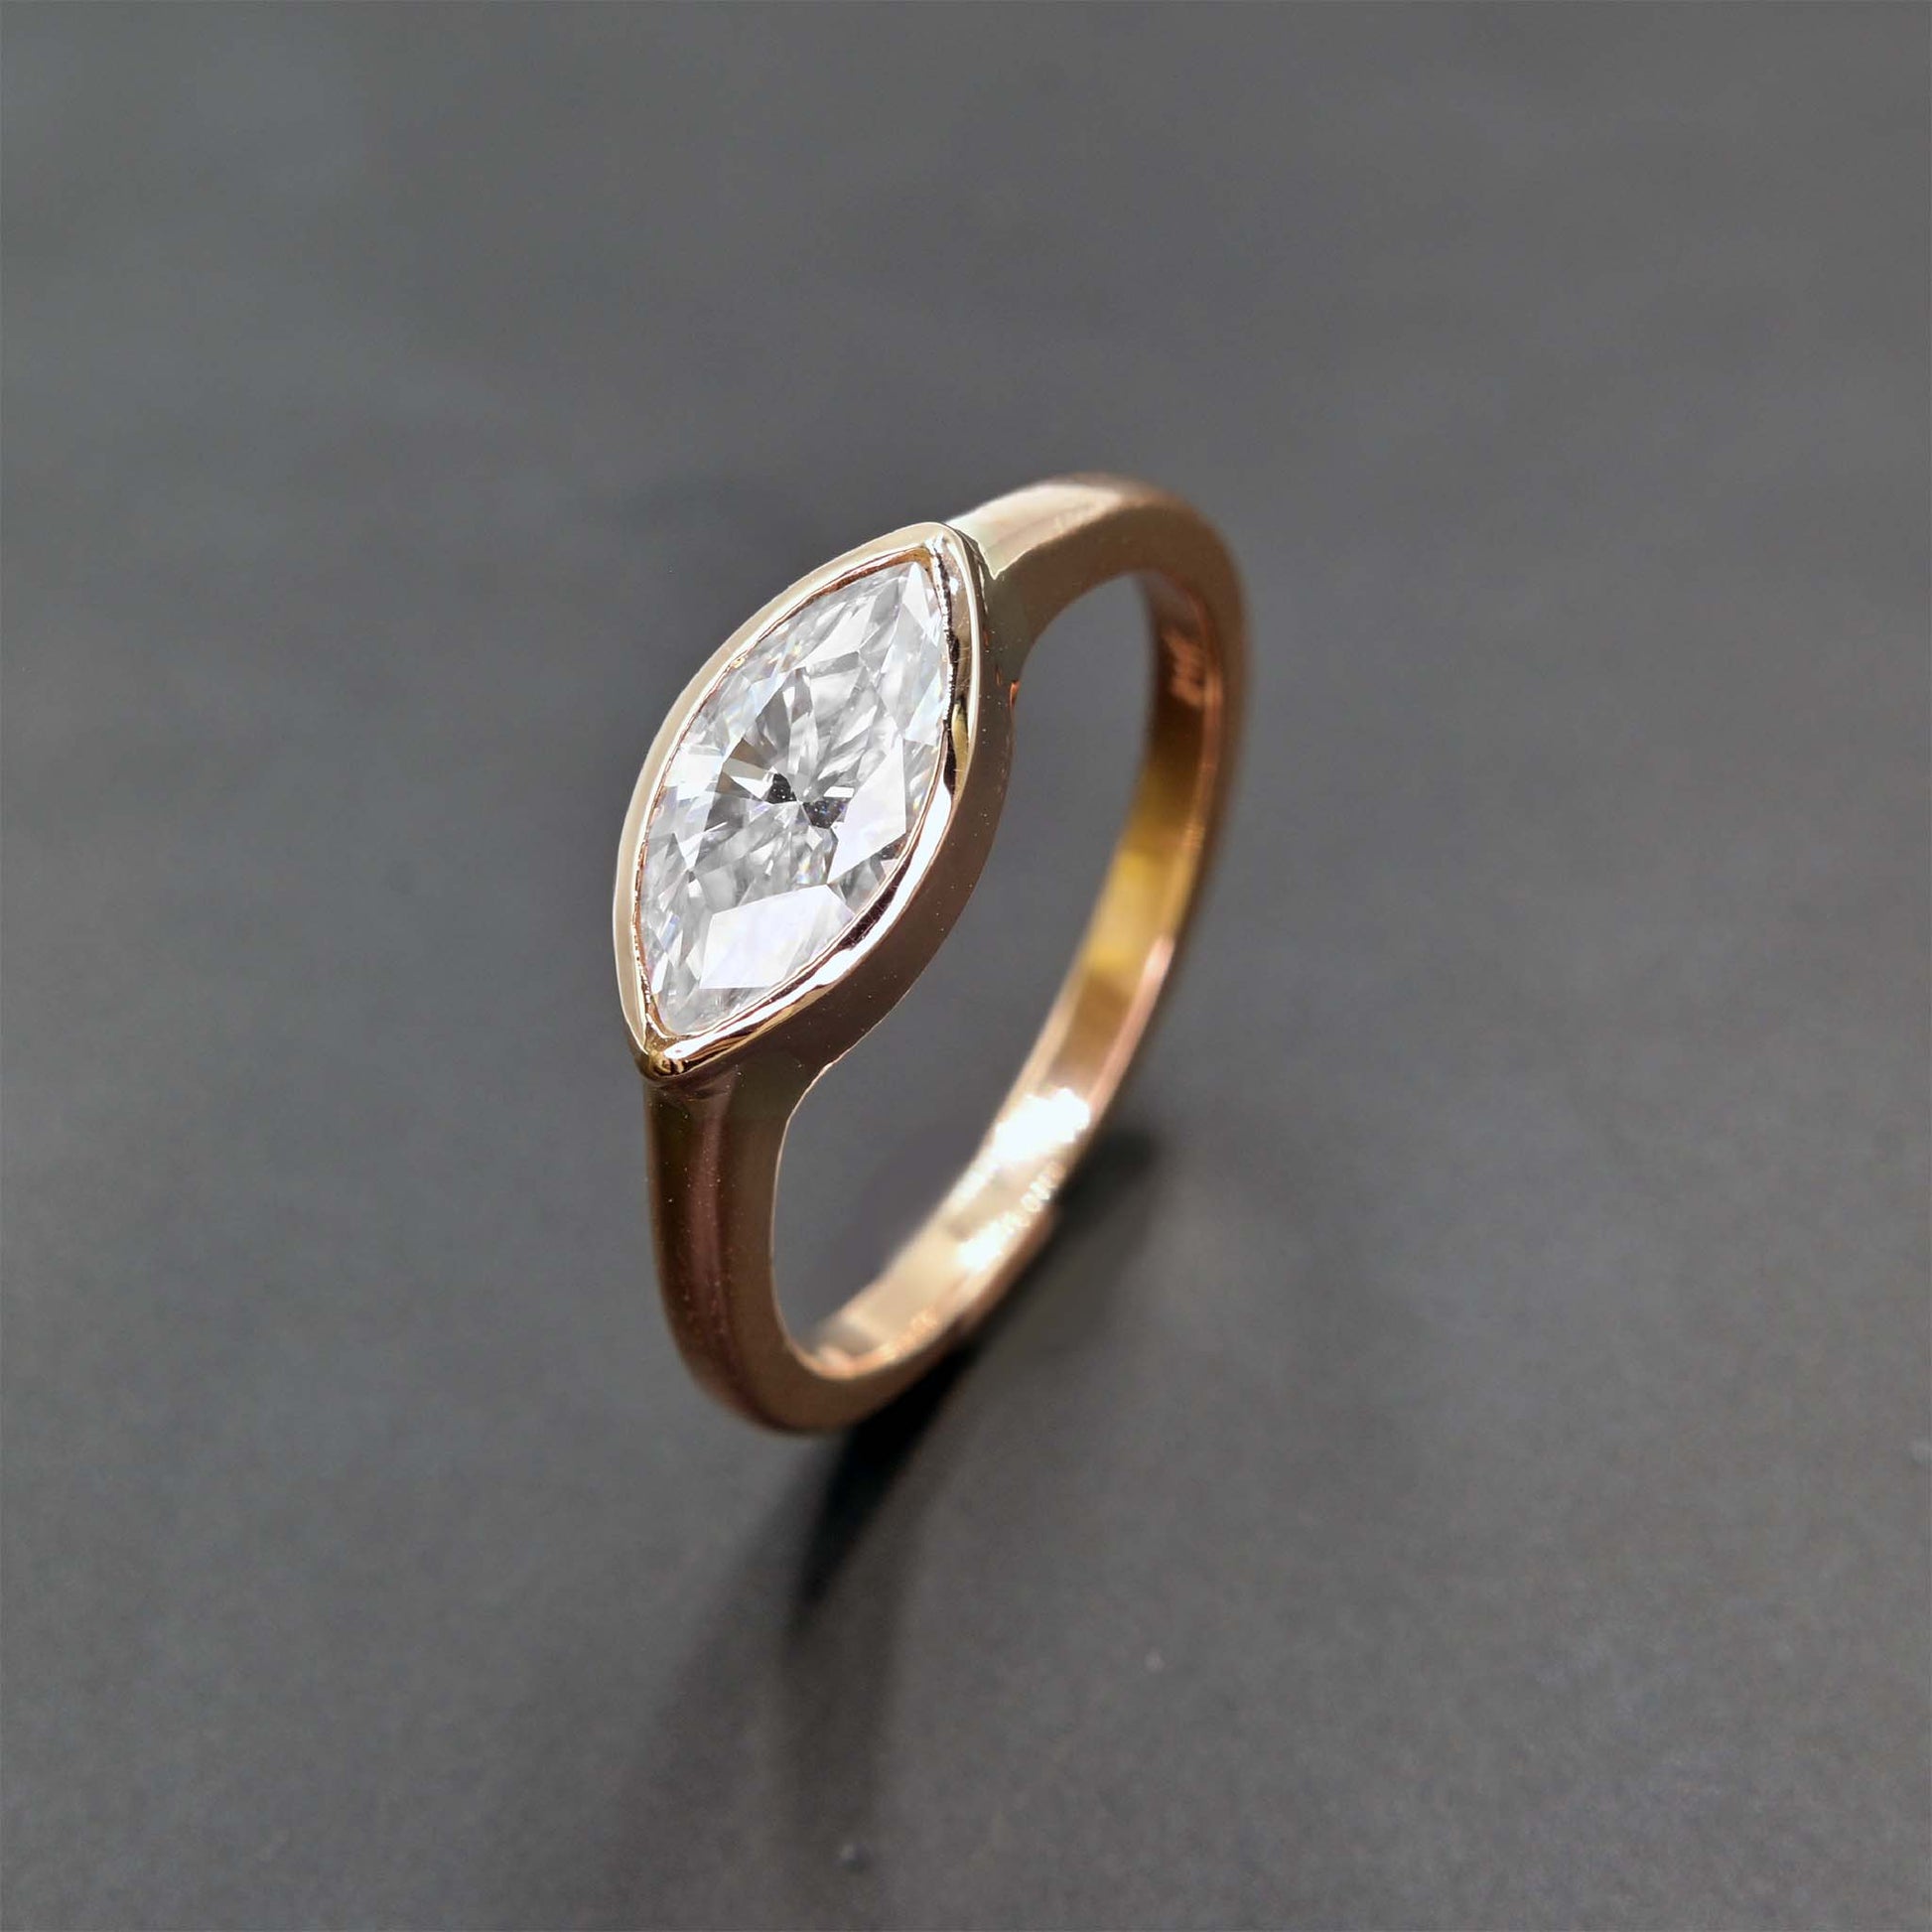 Marquise moissanite ring for women, handmade with 14k rosegold